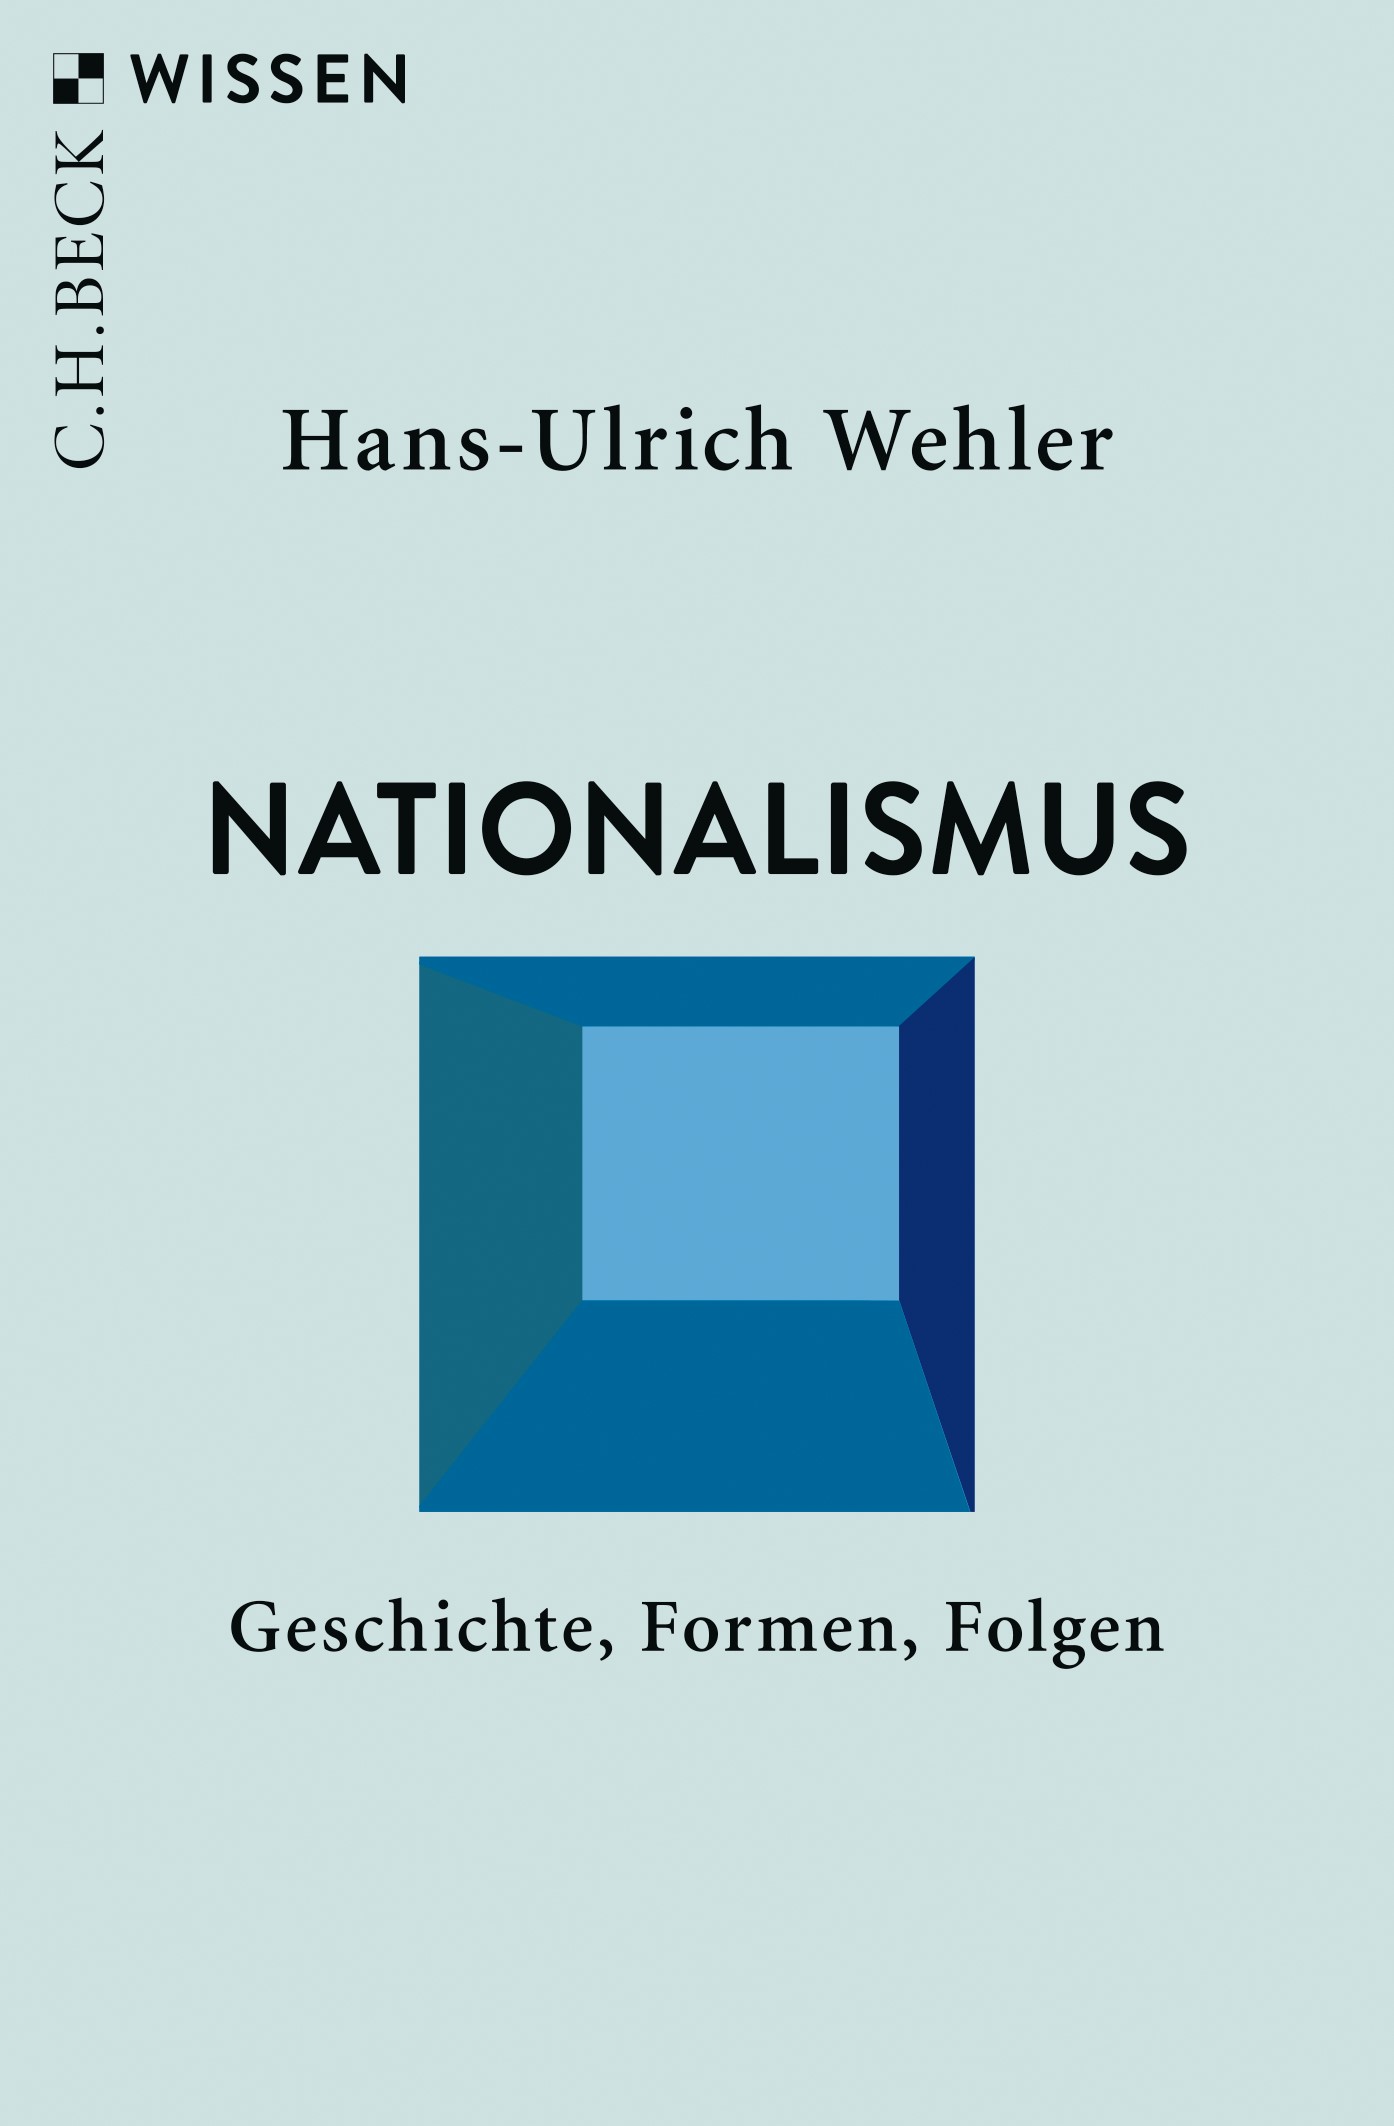 Cover: Wehler, Hans-Ulrich, Nationalismus